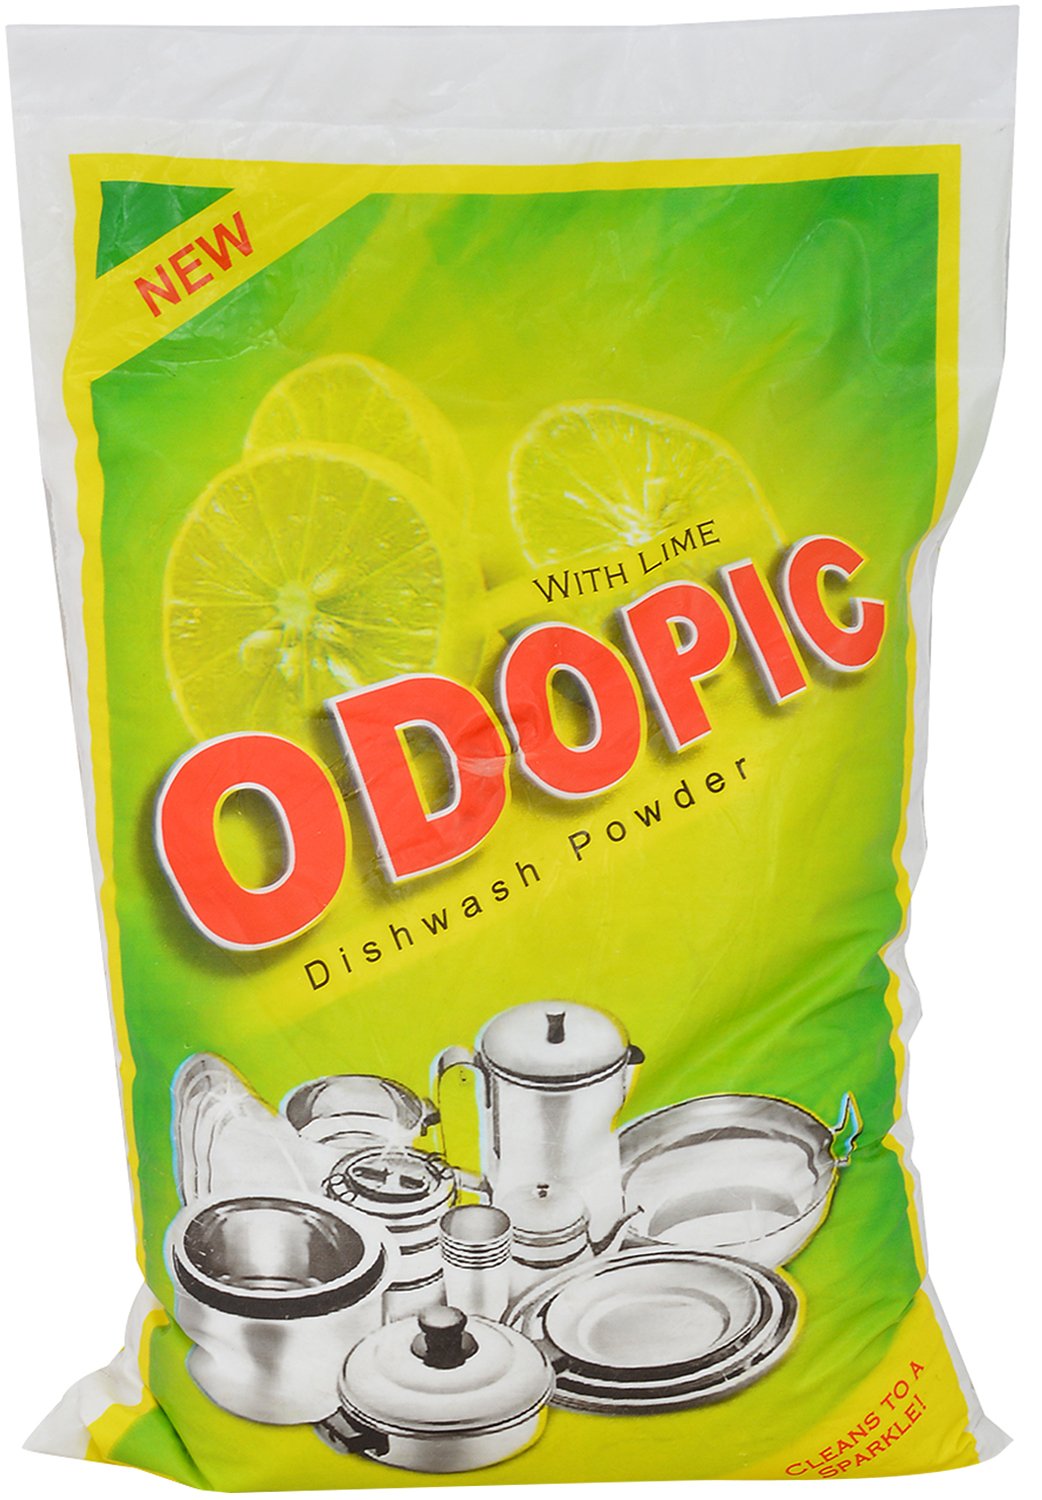 Odopic Dishwash - Powder 1kg Pack